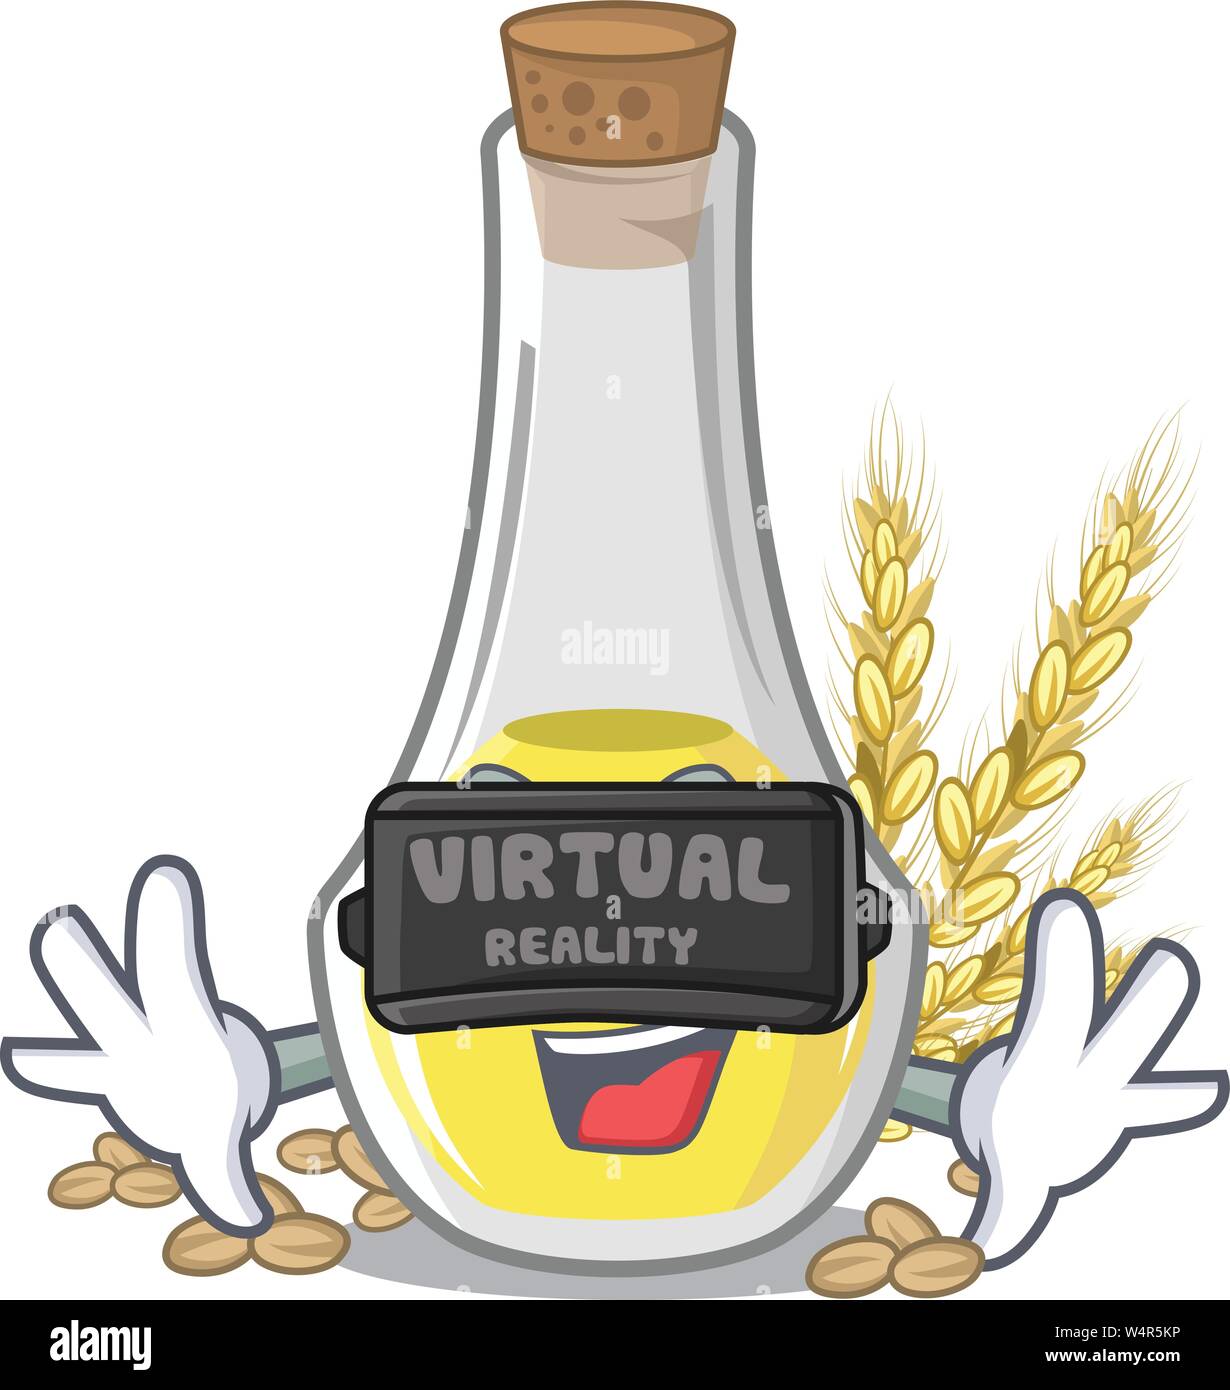 Virtual reality wheat germ oil in a cartoon vector illustration Stock Vector